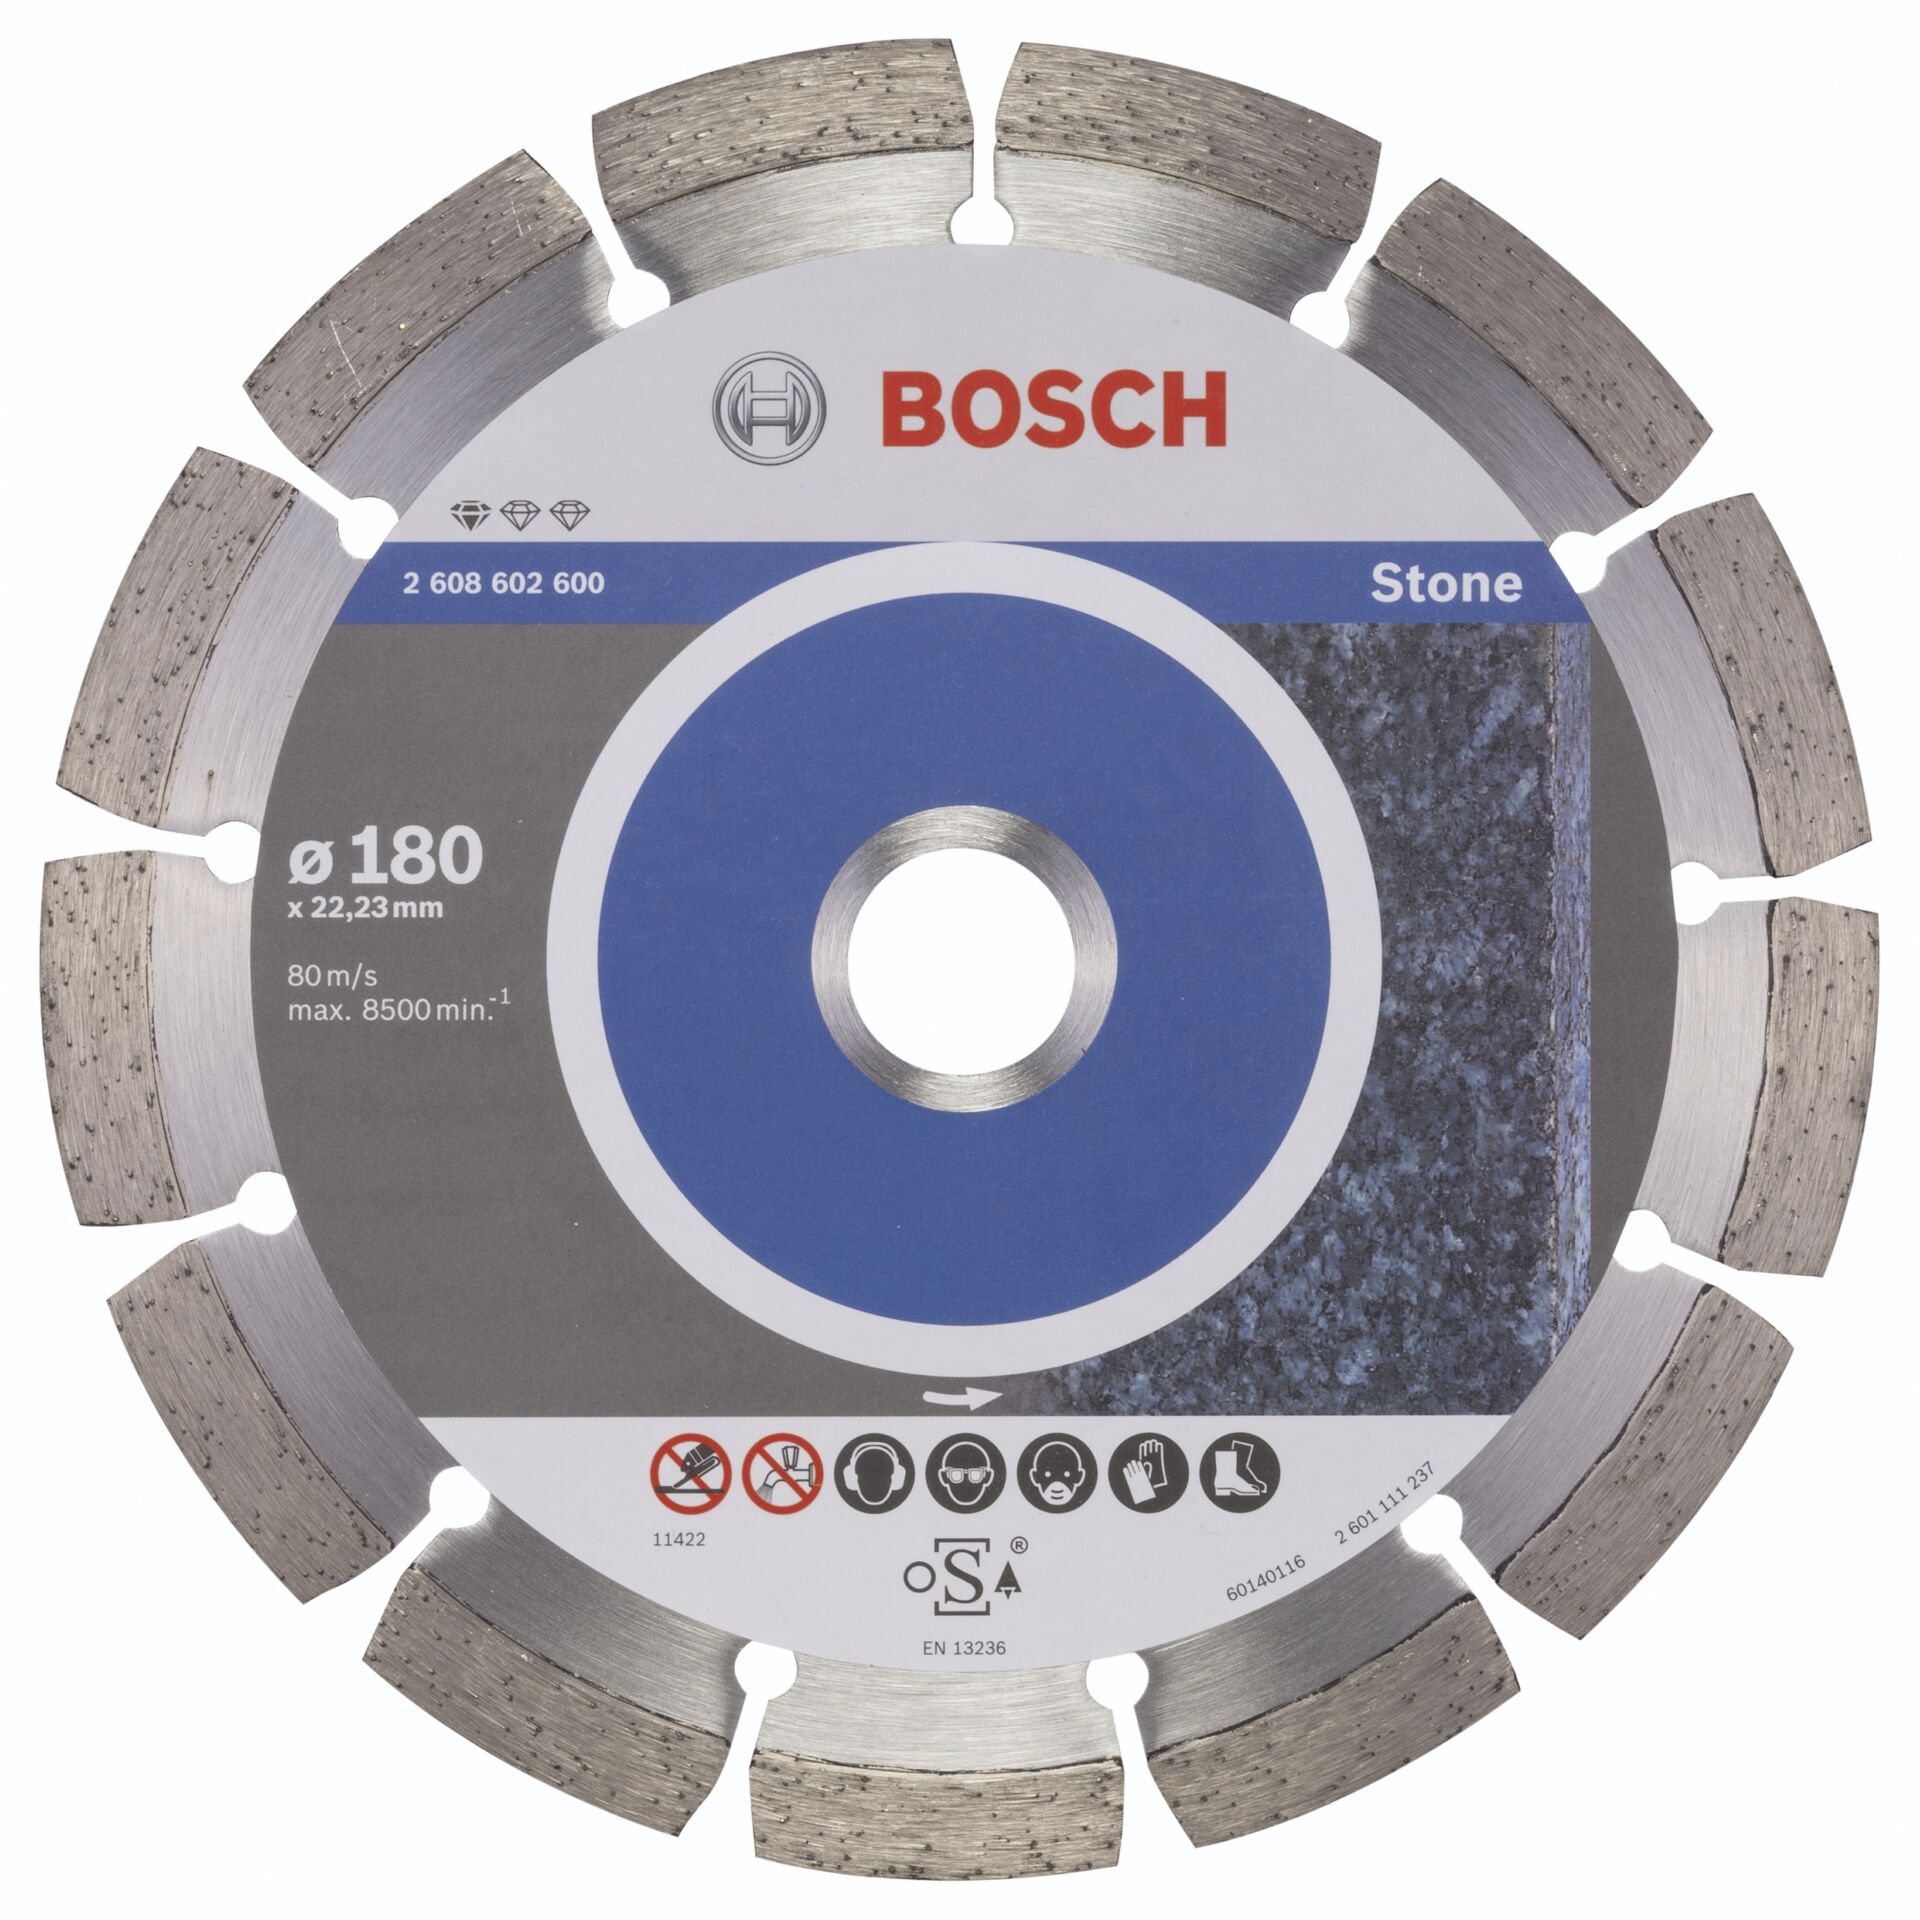 Bosch DIA-TS 180x22,23 Standard For Stone